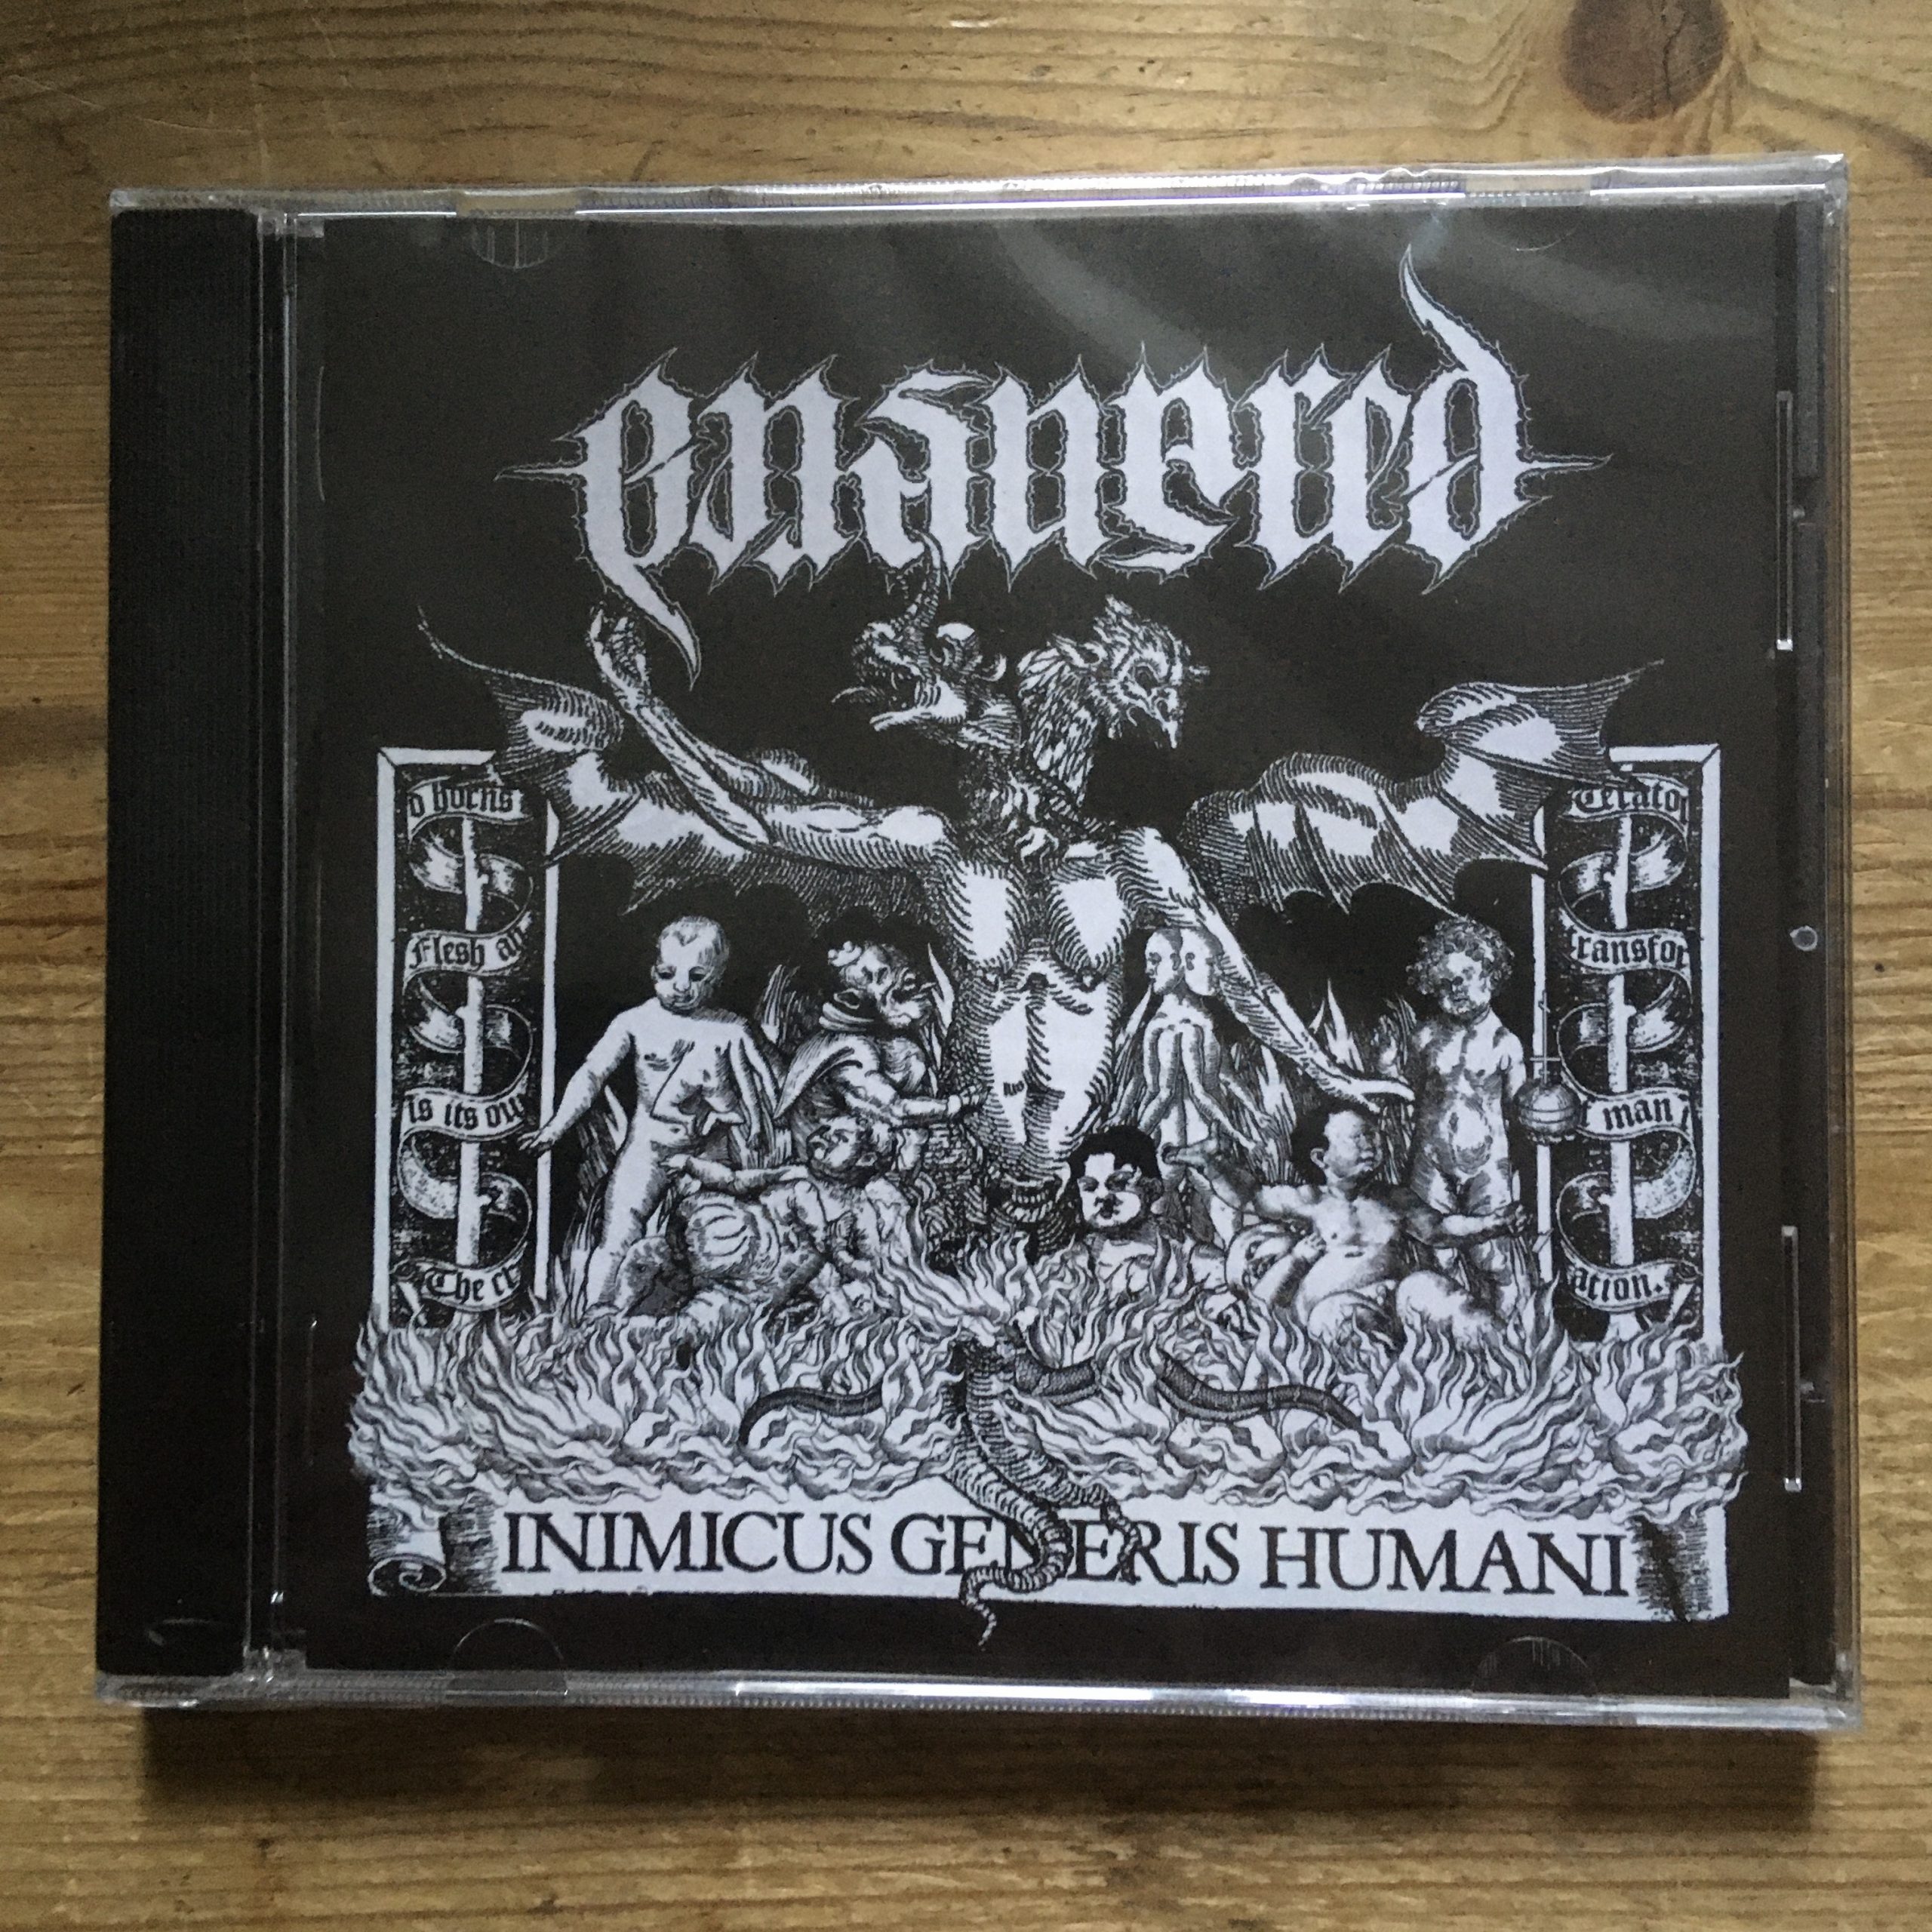 Photo of the Ensnared - "Inimicus Generis Humani" CD